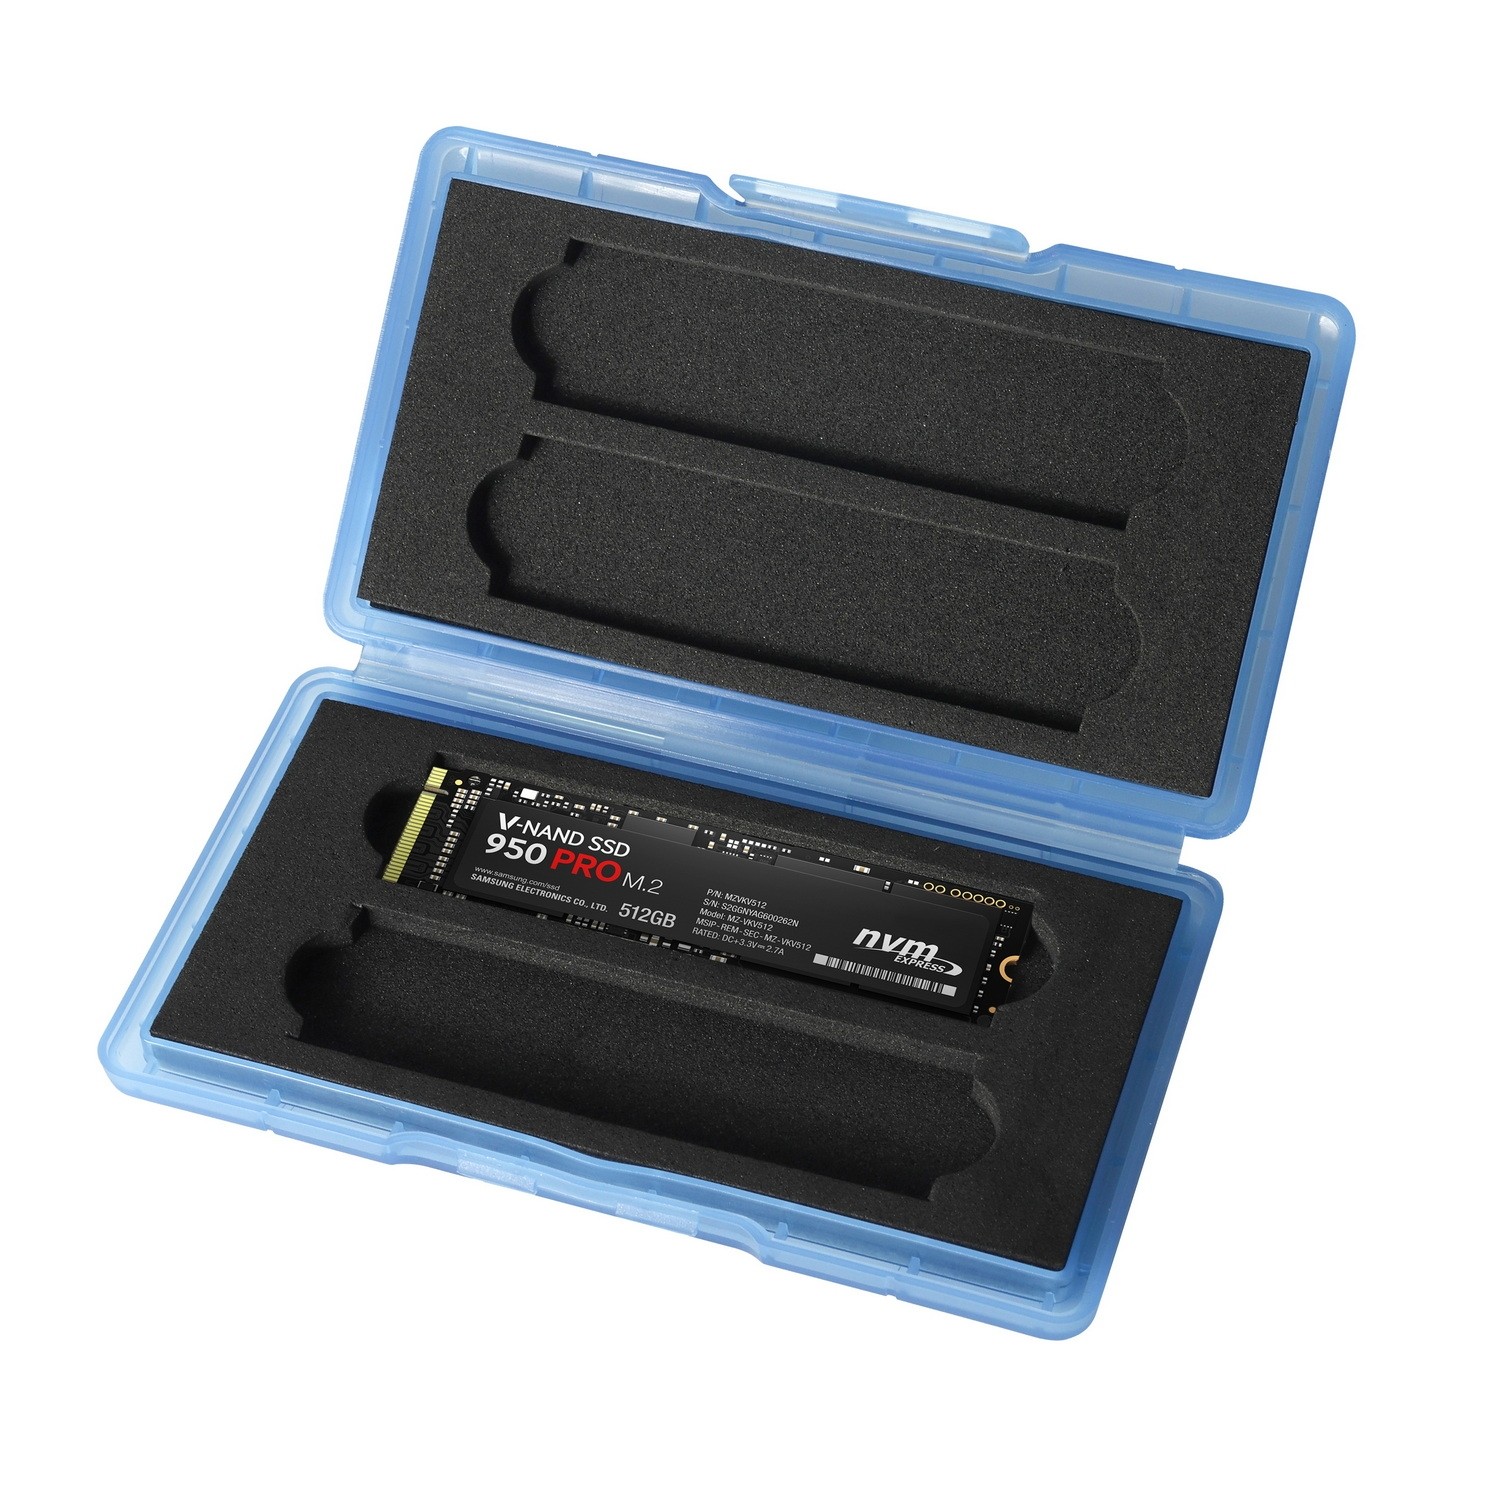  M.2 SSD 4-Slot Protective Storage Case Holder Organizer for 4x M.2 2280 SSD<br>Colours Available: White, Blue, Black, Orange  